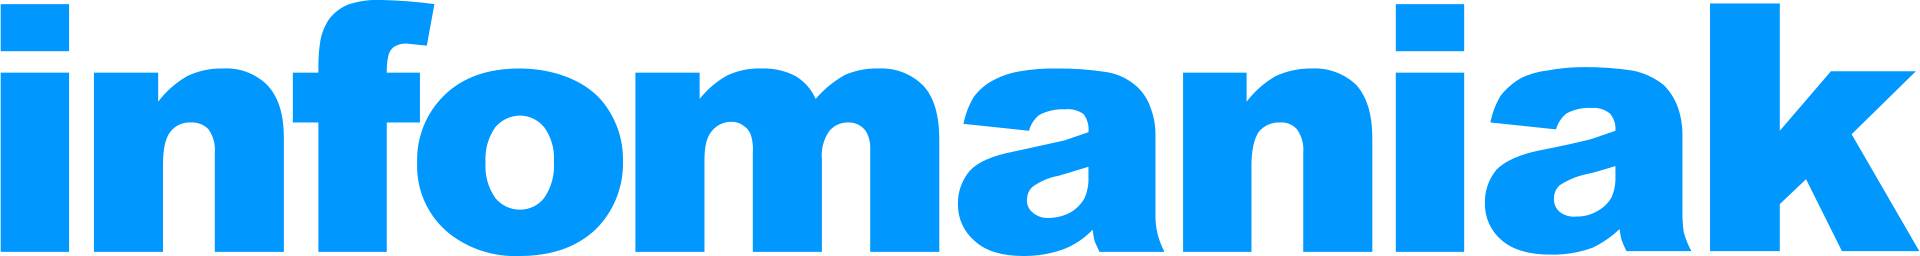 Infomaniak logo